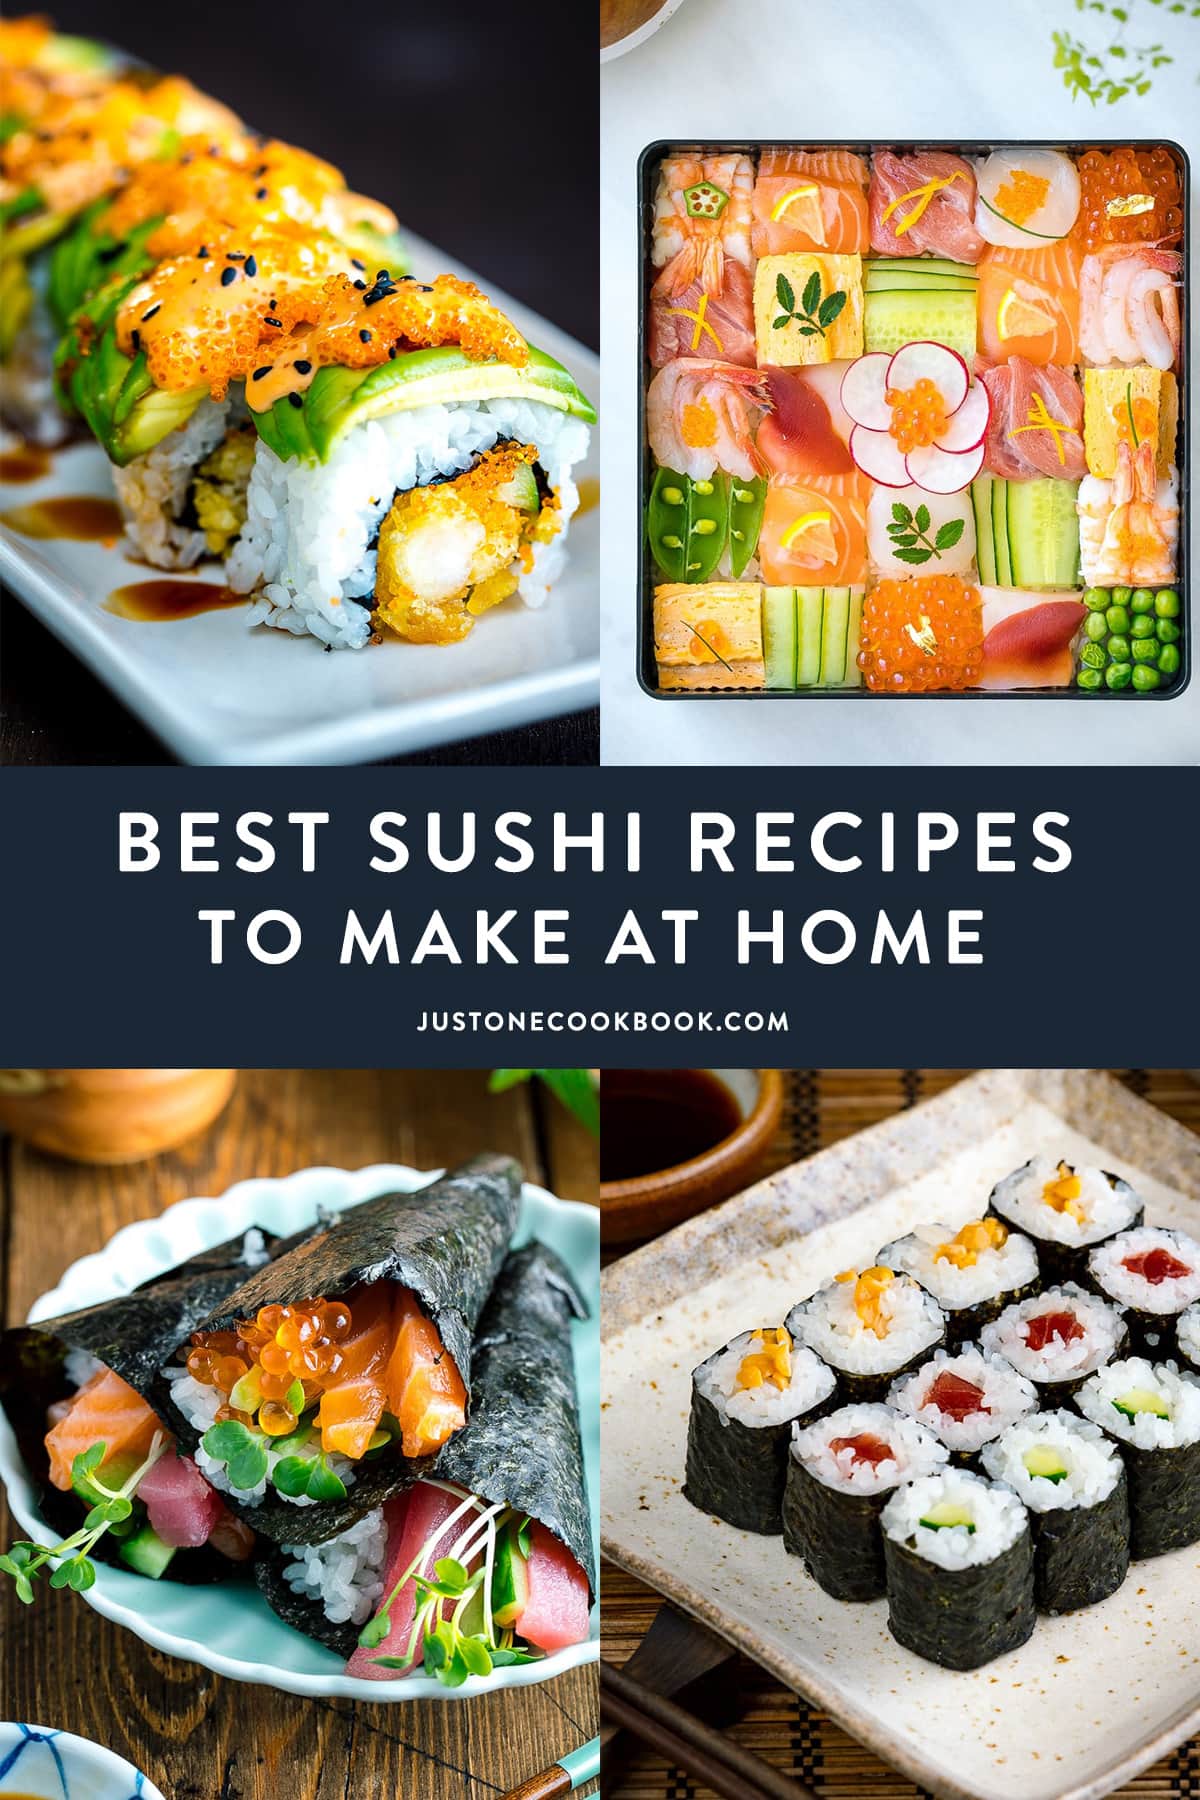 https://www.justonecookbook.com/wp-content/uploads/2022/12/best-sushi-recipes.jpg